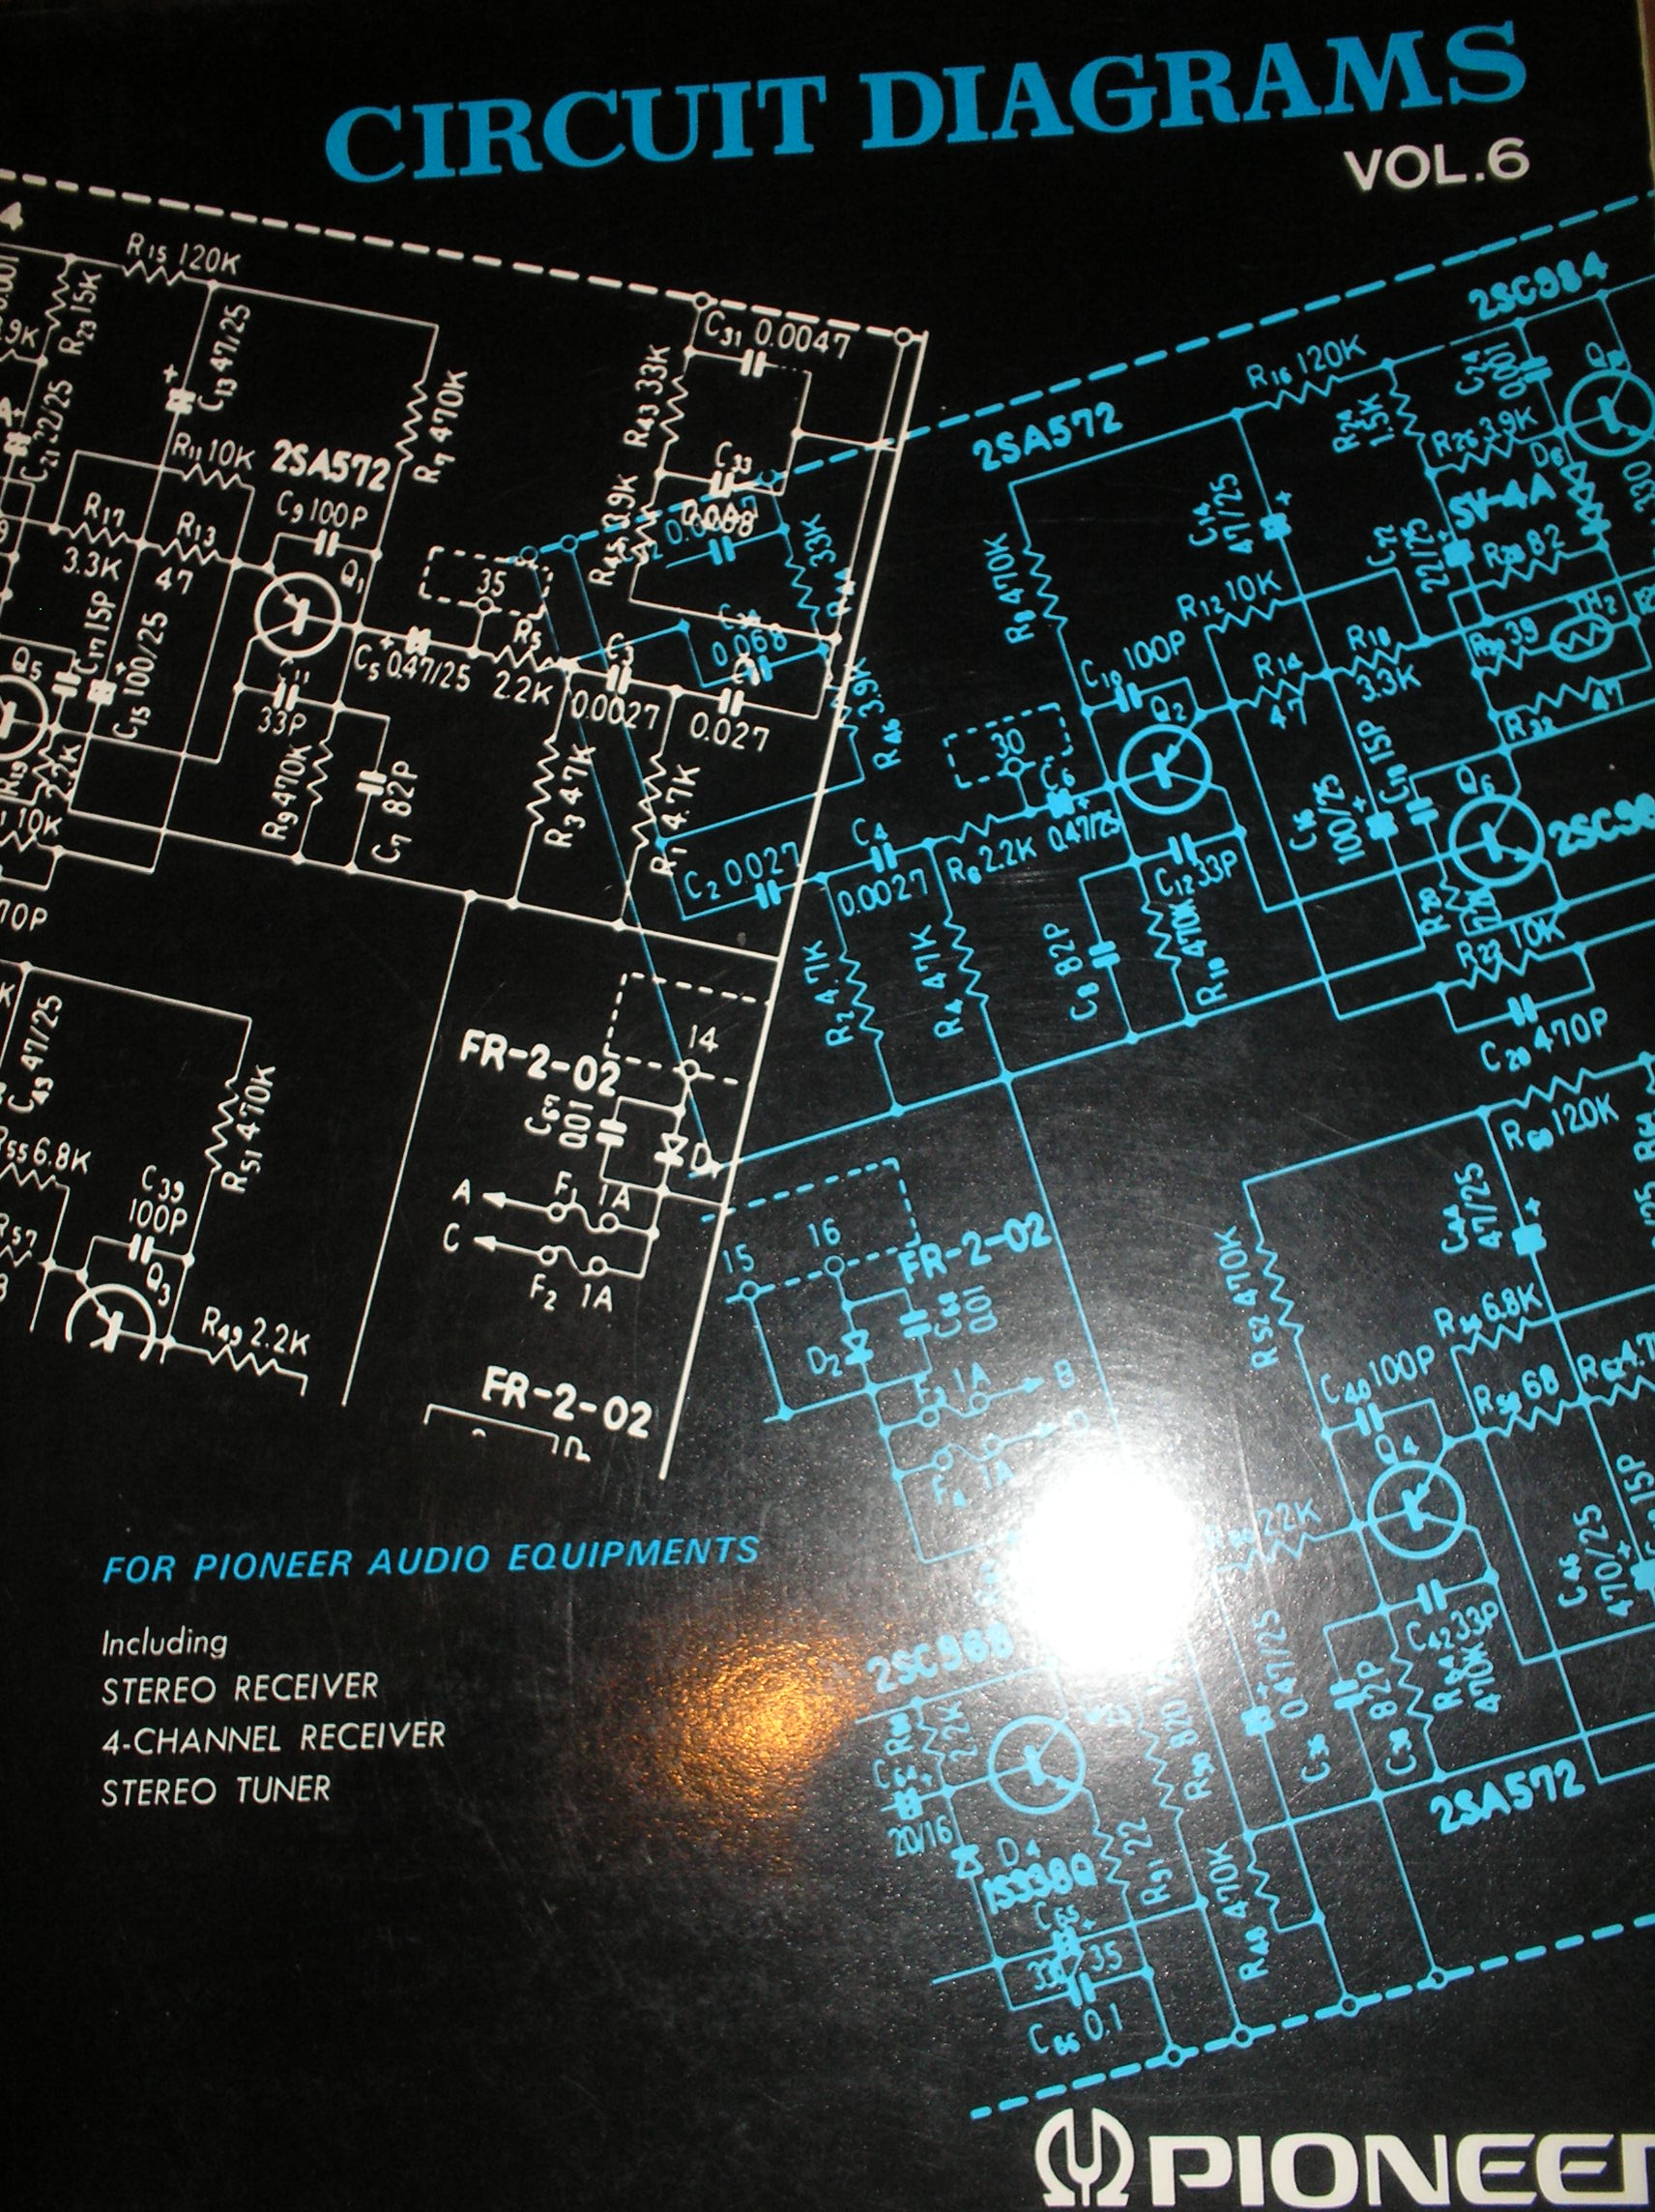 SX-525 Stereo Receiver schematic.   Book 6